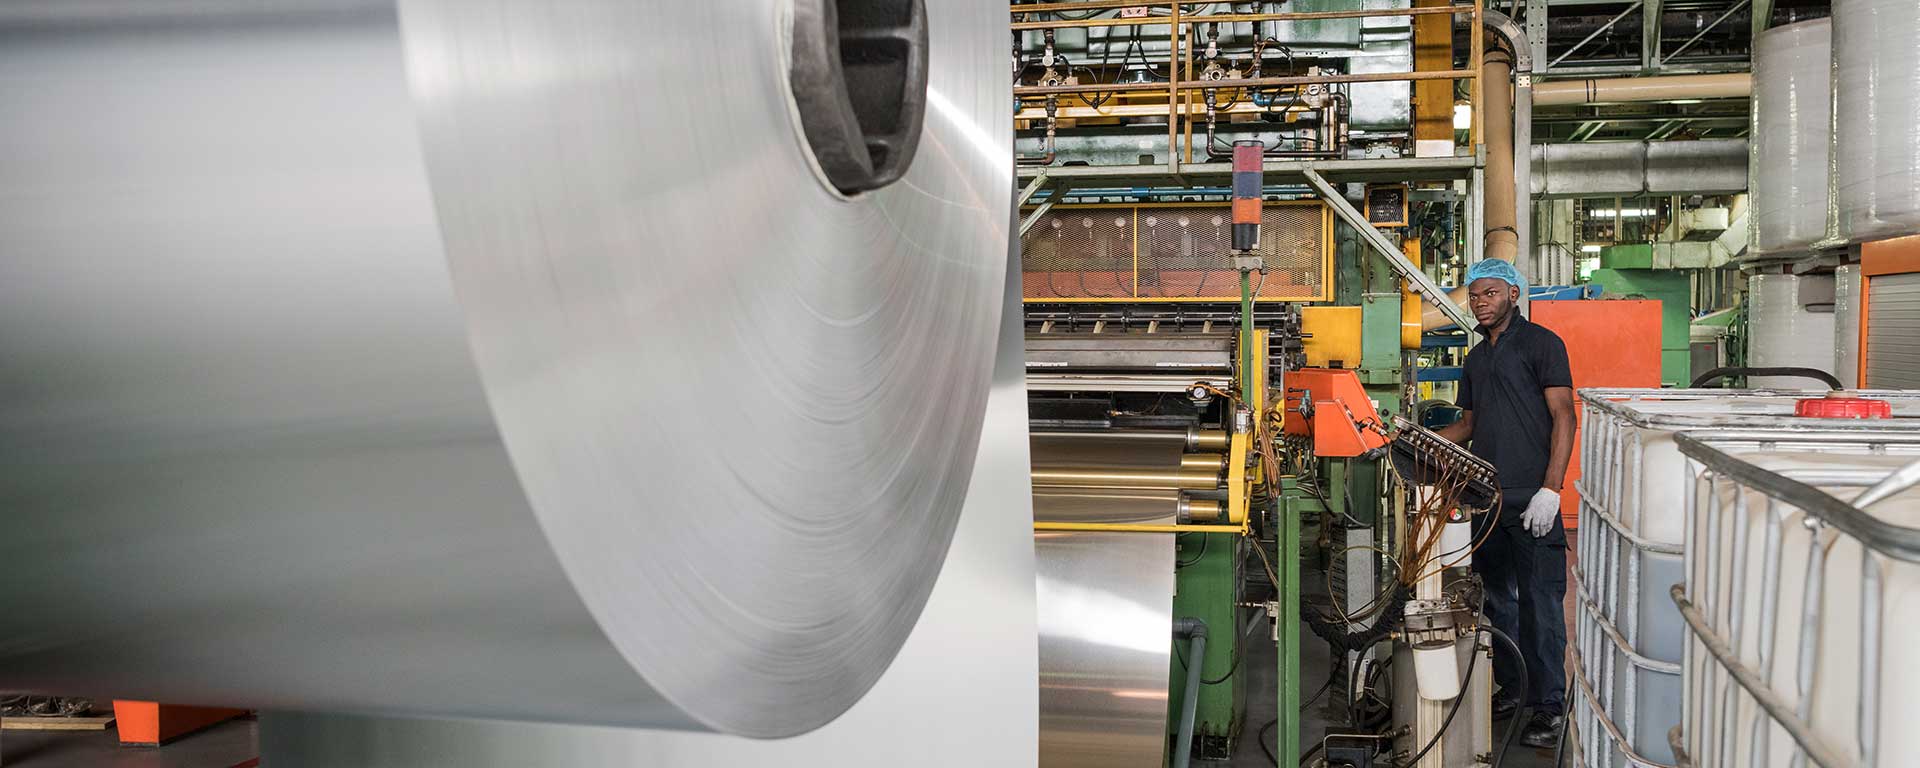 Worker observes roll of sheet metal in factory